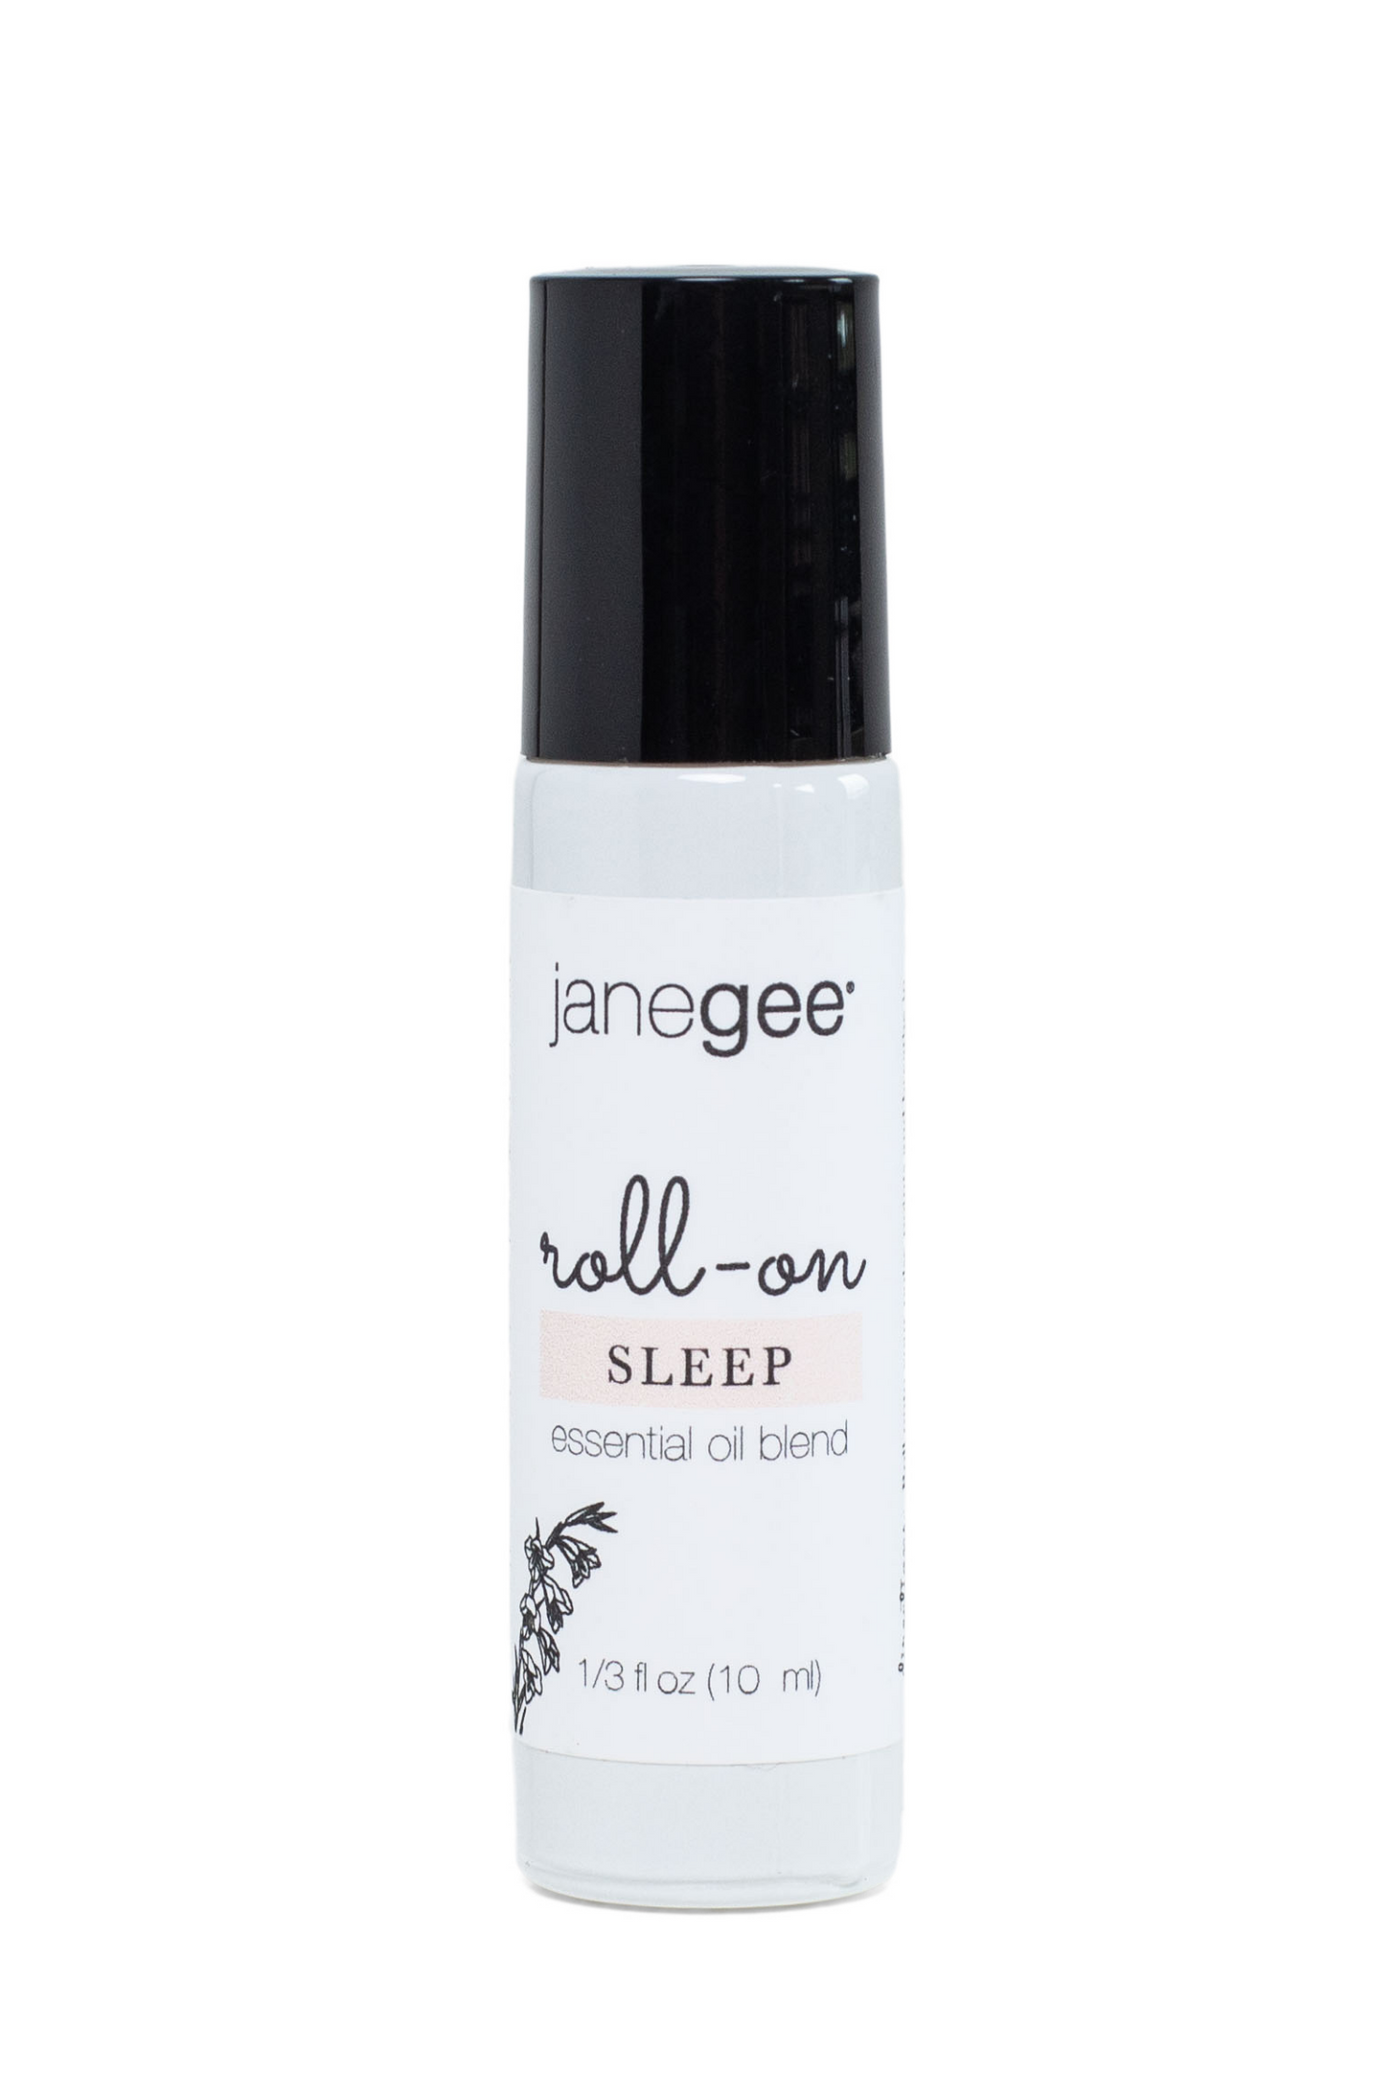 janegee Sleep Aromatherapy Roll-On